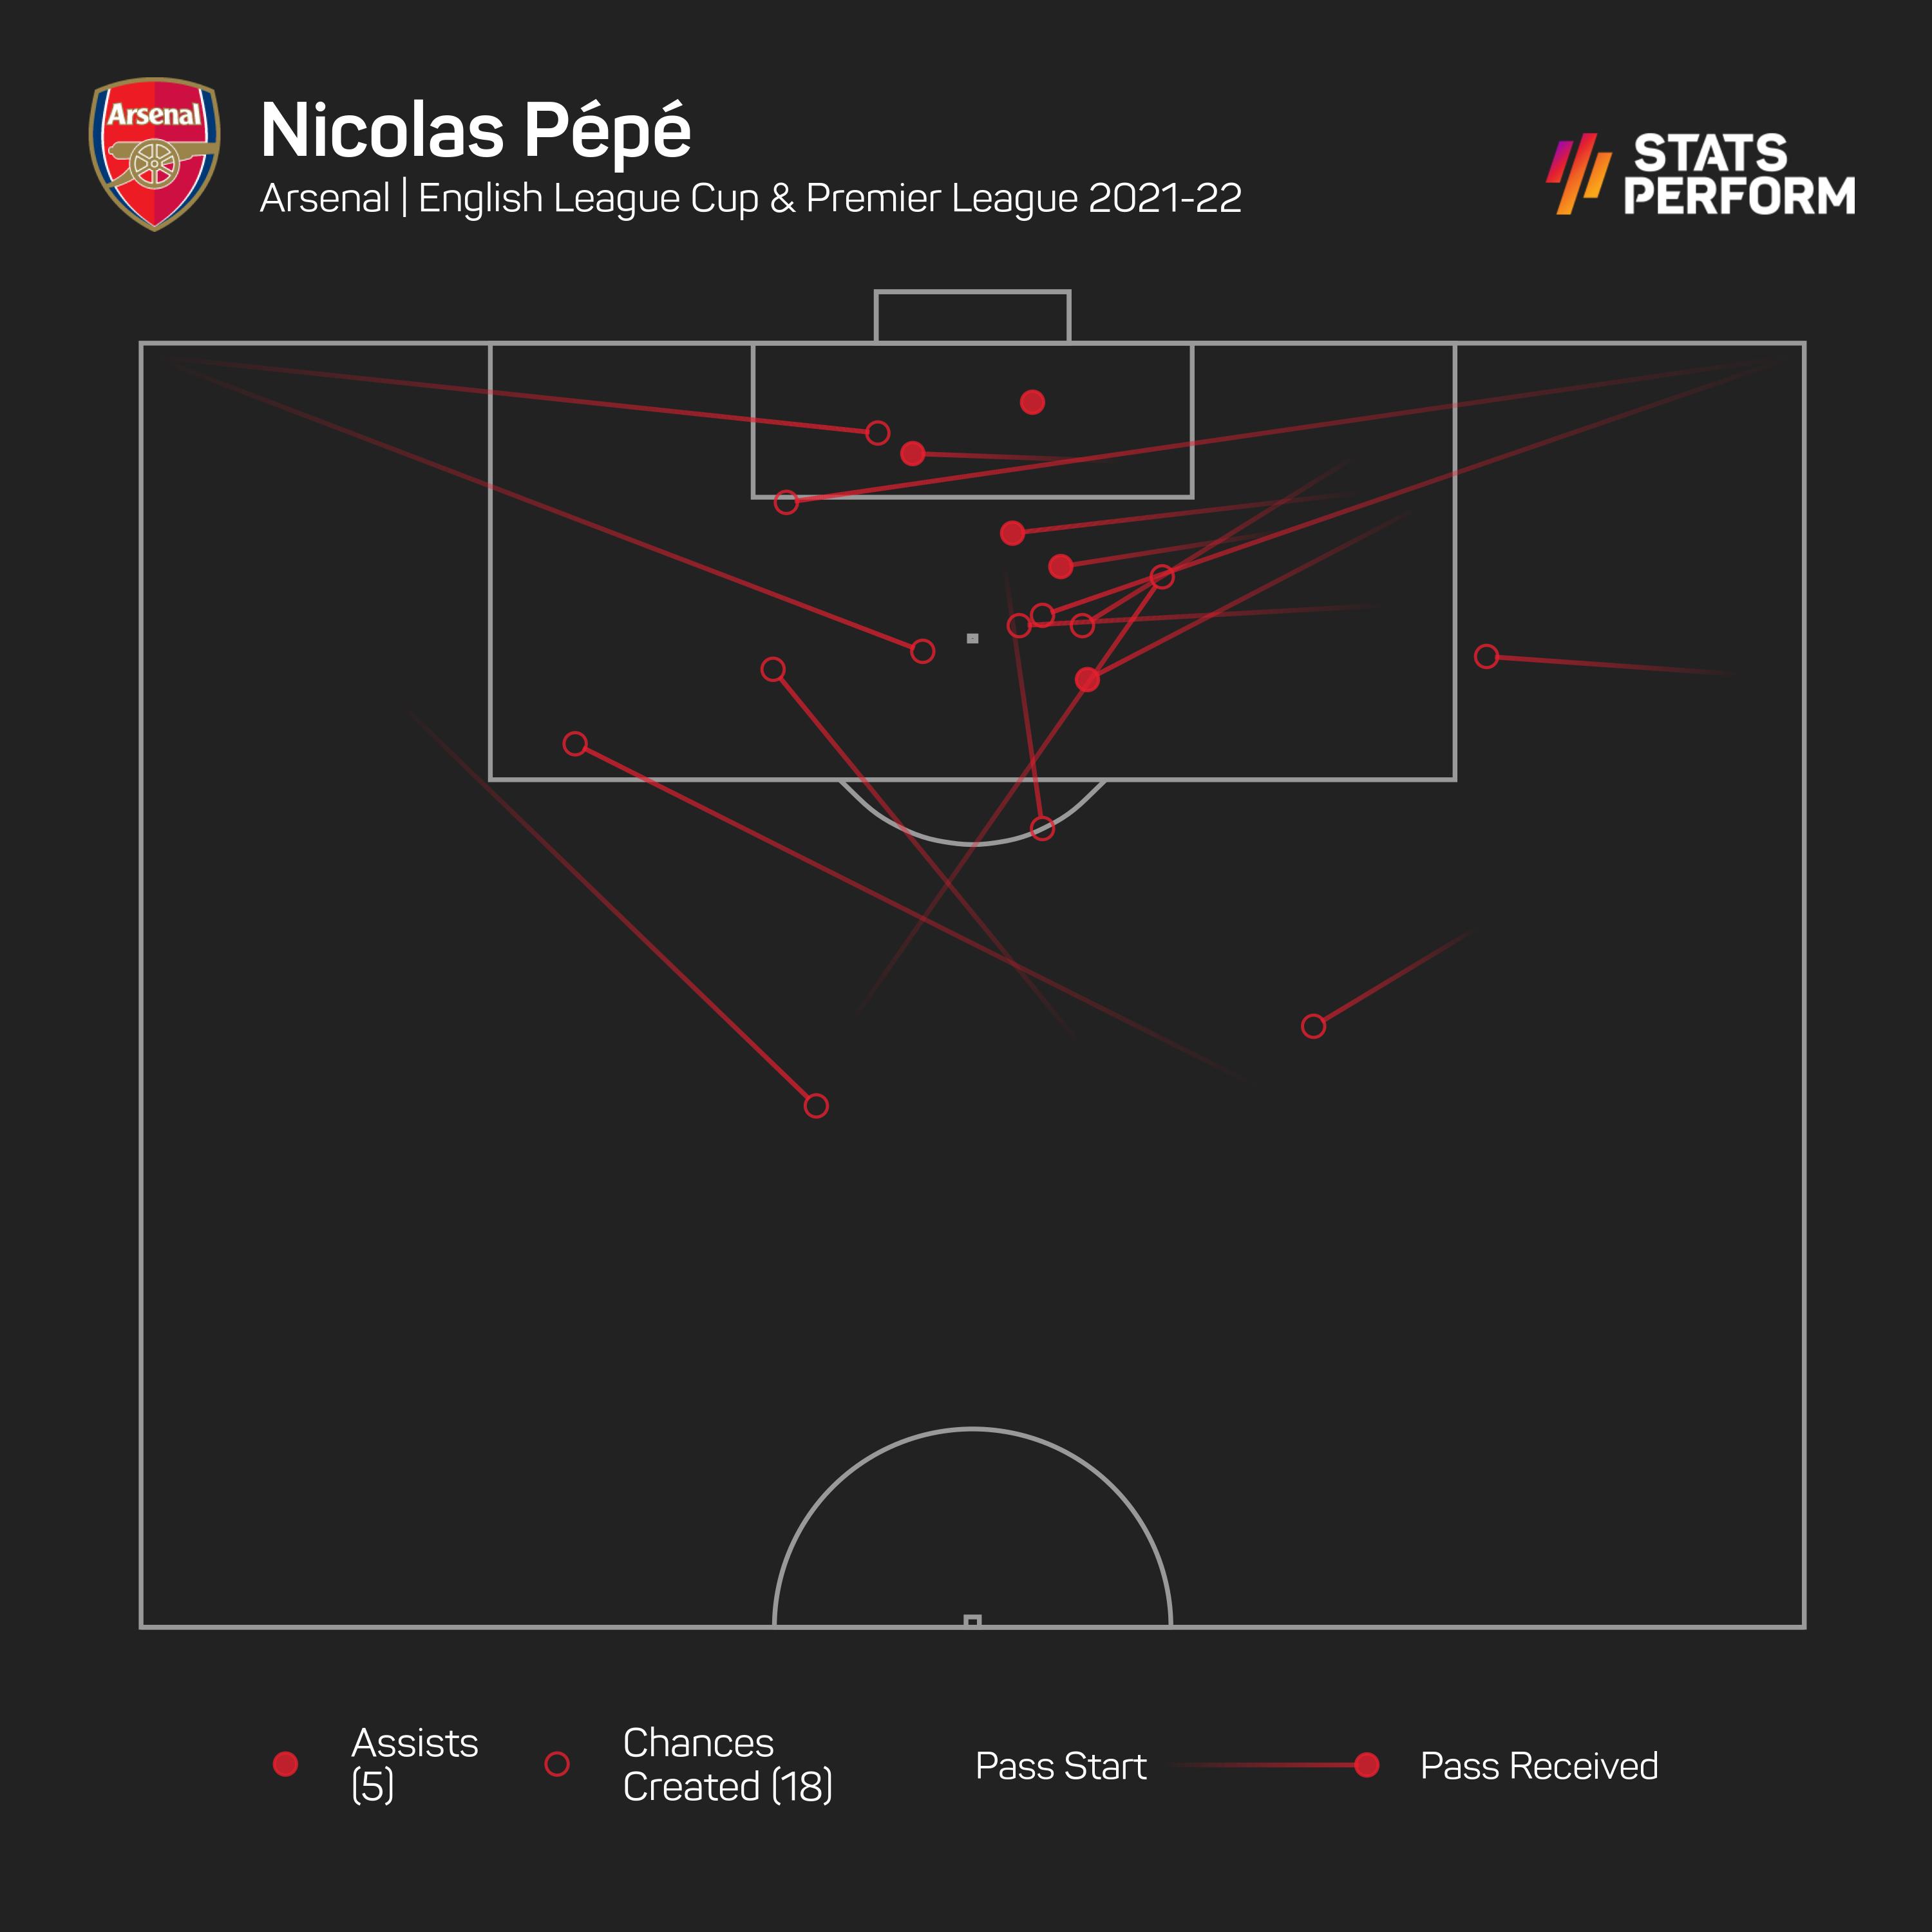 Nicolas Pepe chances created in 2021-22